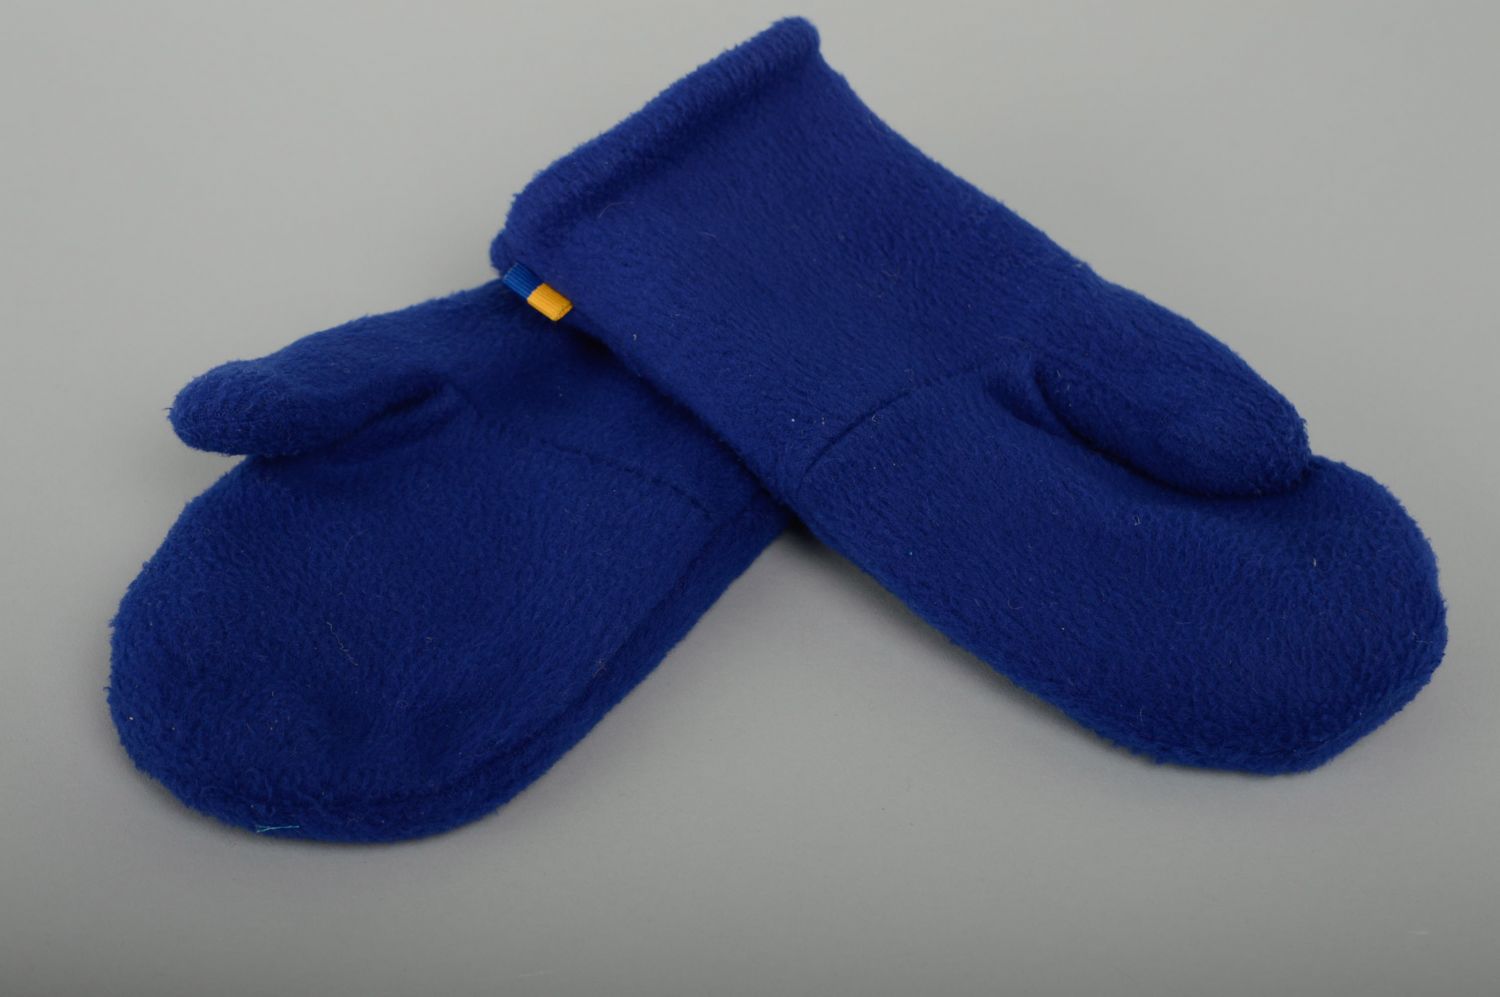 Теплые варежки с вышивкой синие из флиса фото 2